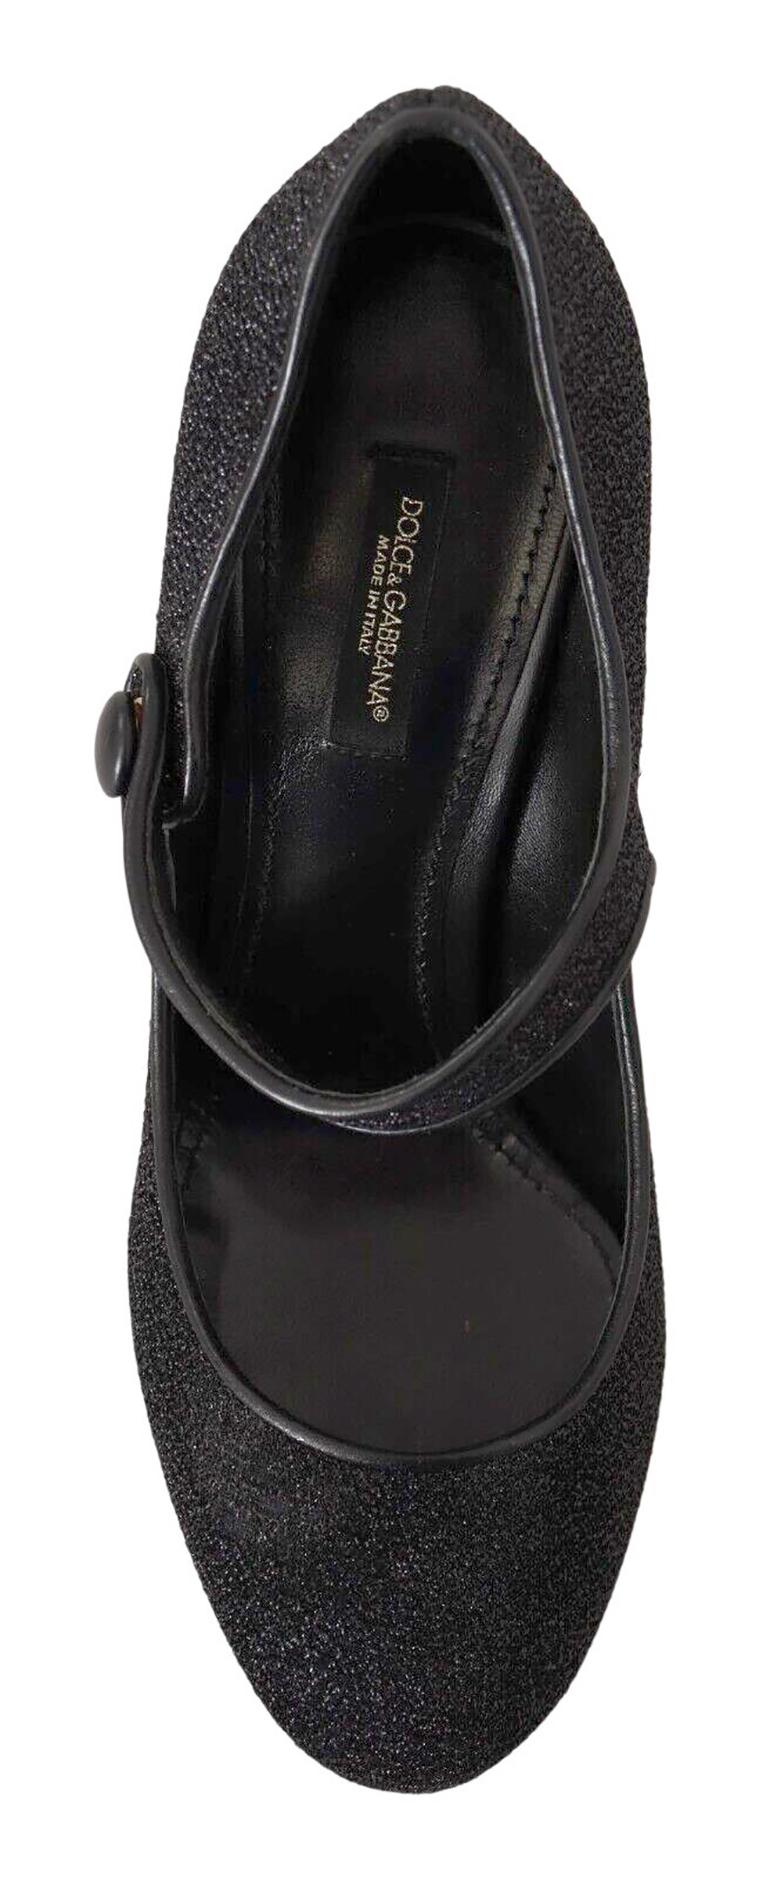 Dolce & Gabbana Black Cloth Gold DG Baroque Heels Shoes Pumps Devotion Mary Jane 1